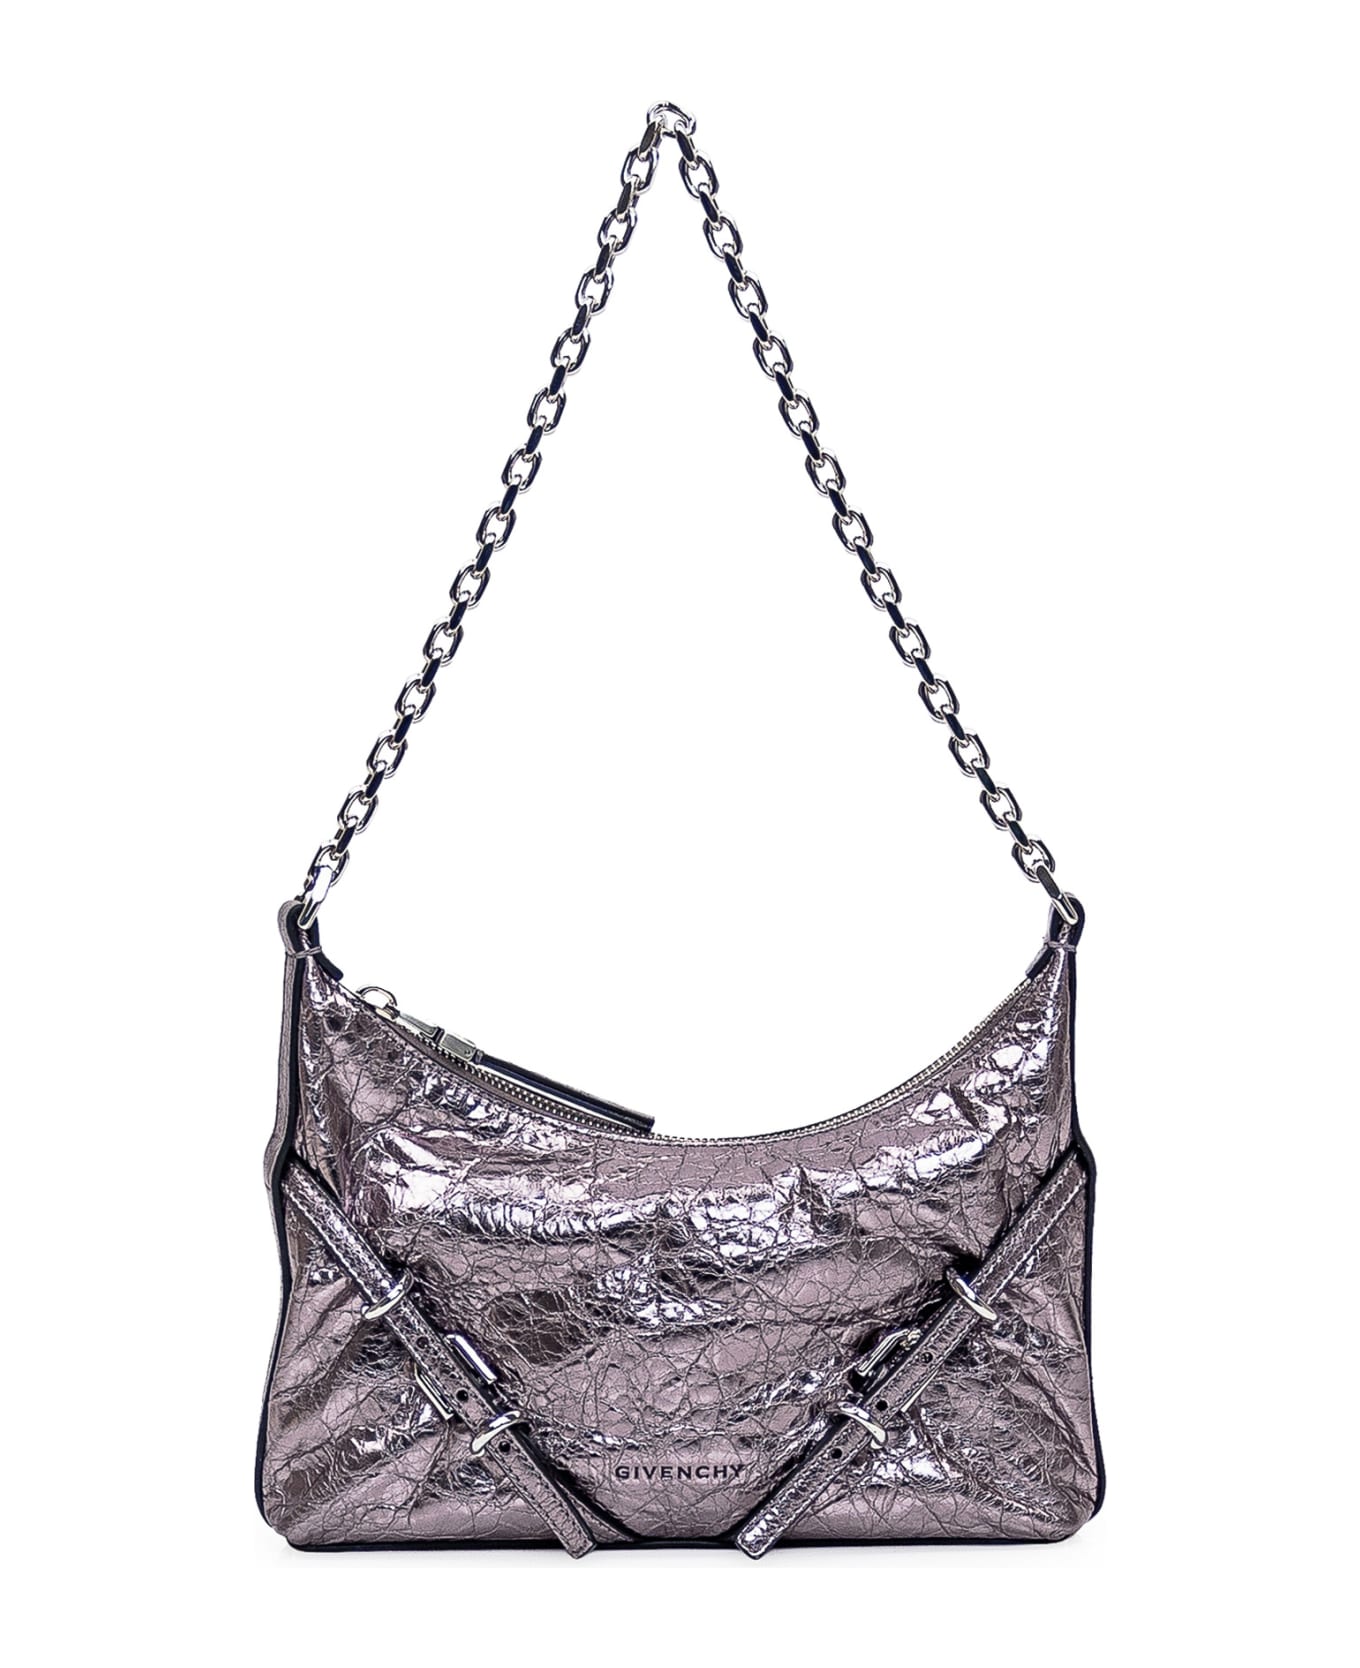 Givenchy Voyou Party Shoulder Bag - SILVER GREY